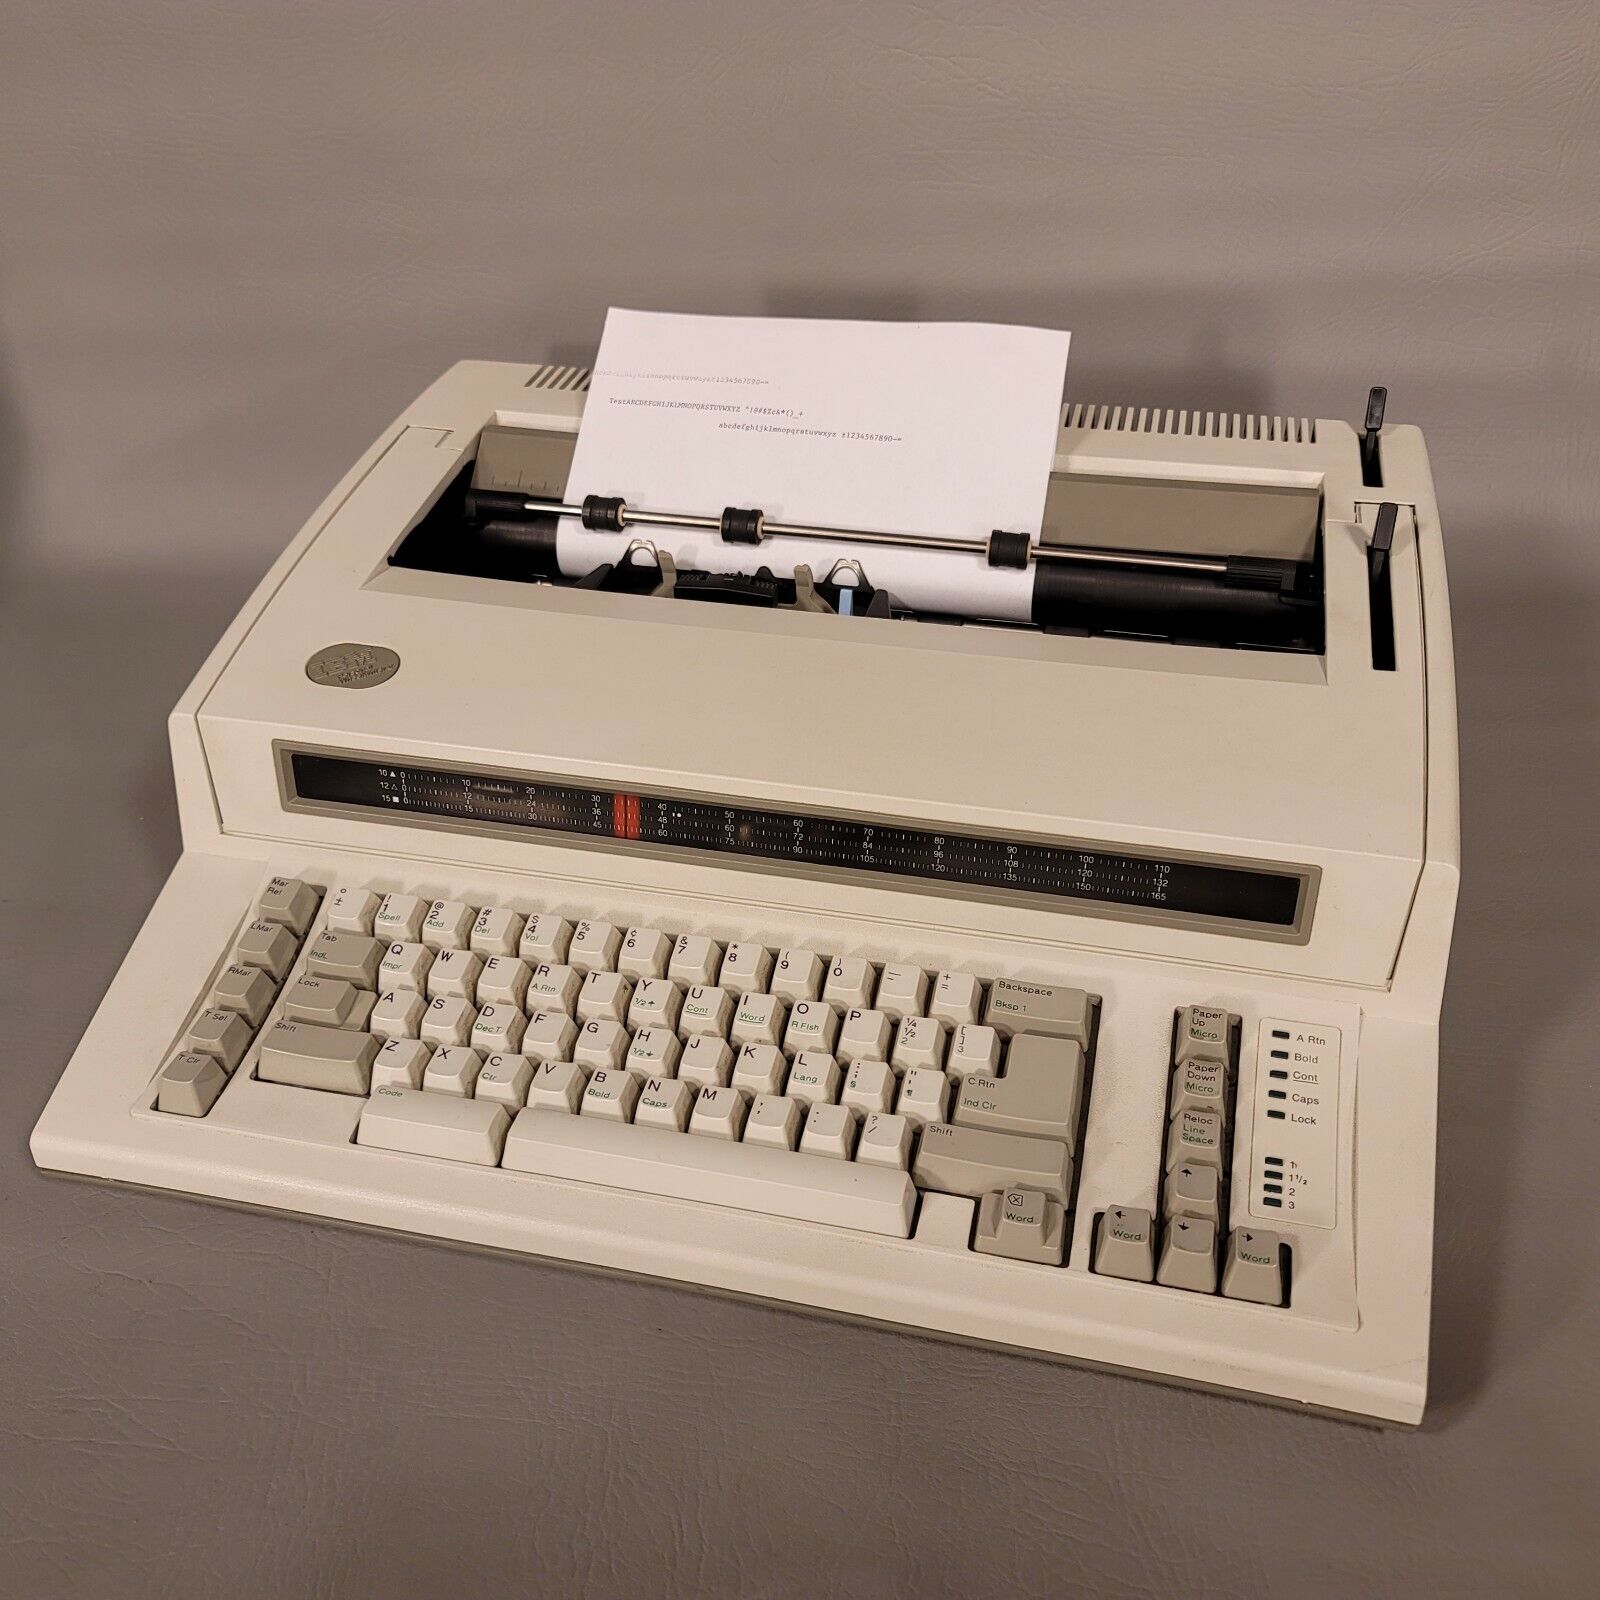 Vintage IBM Personal Wheelwriter 2 Electric Typewriter by Lexmark 6781 Tested